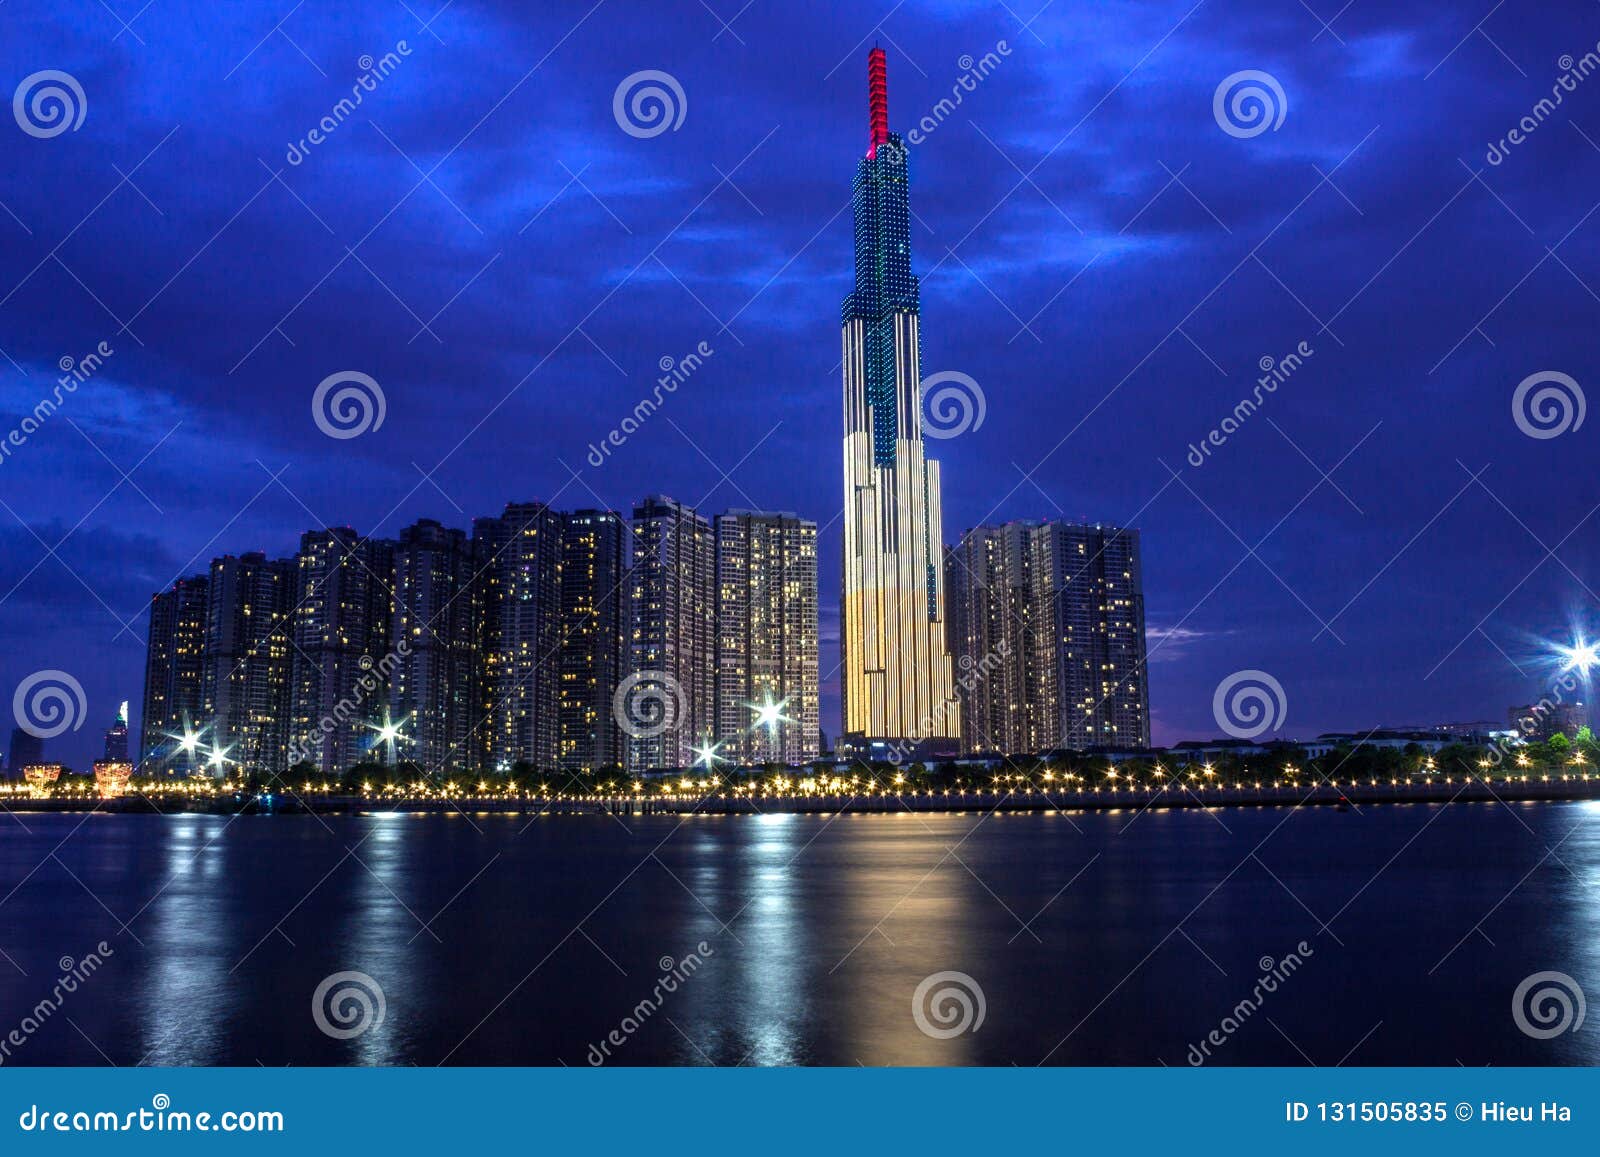 landmark 81 tower, the highest skyscraper in saigon in the evening